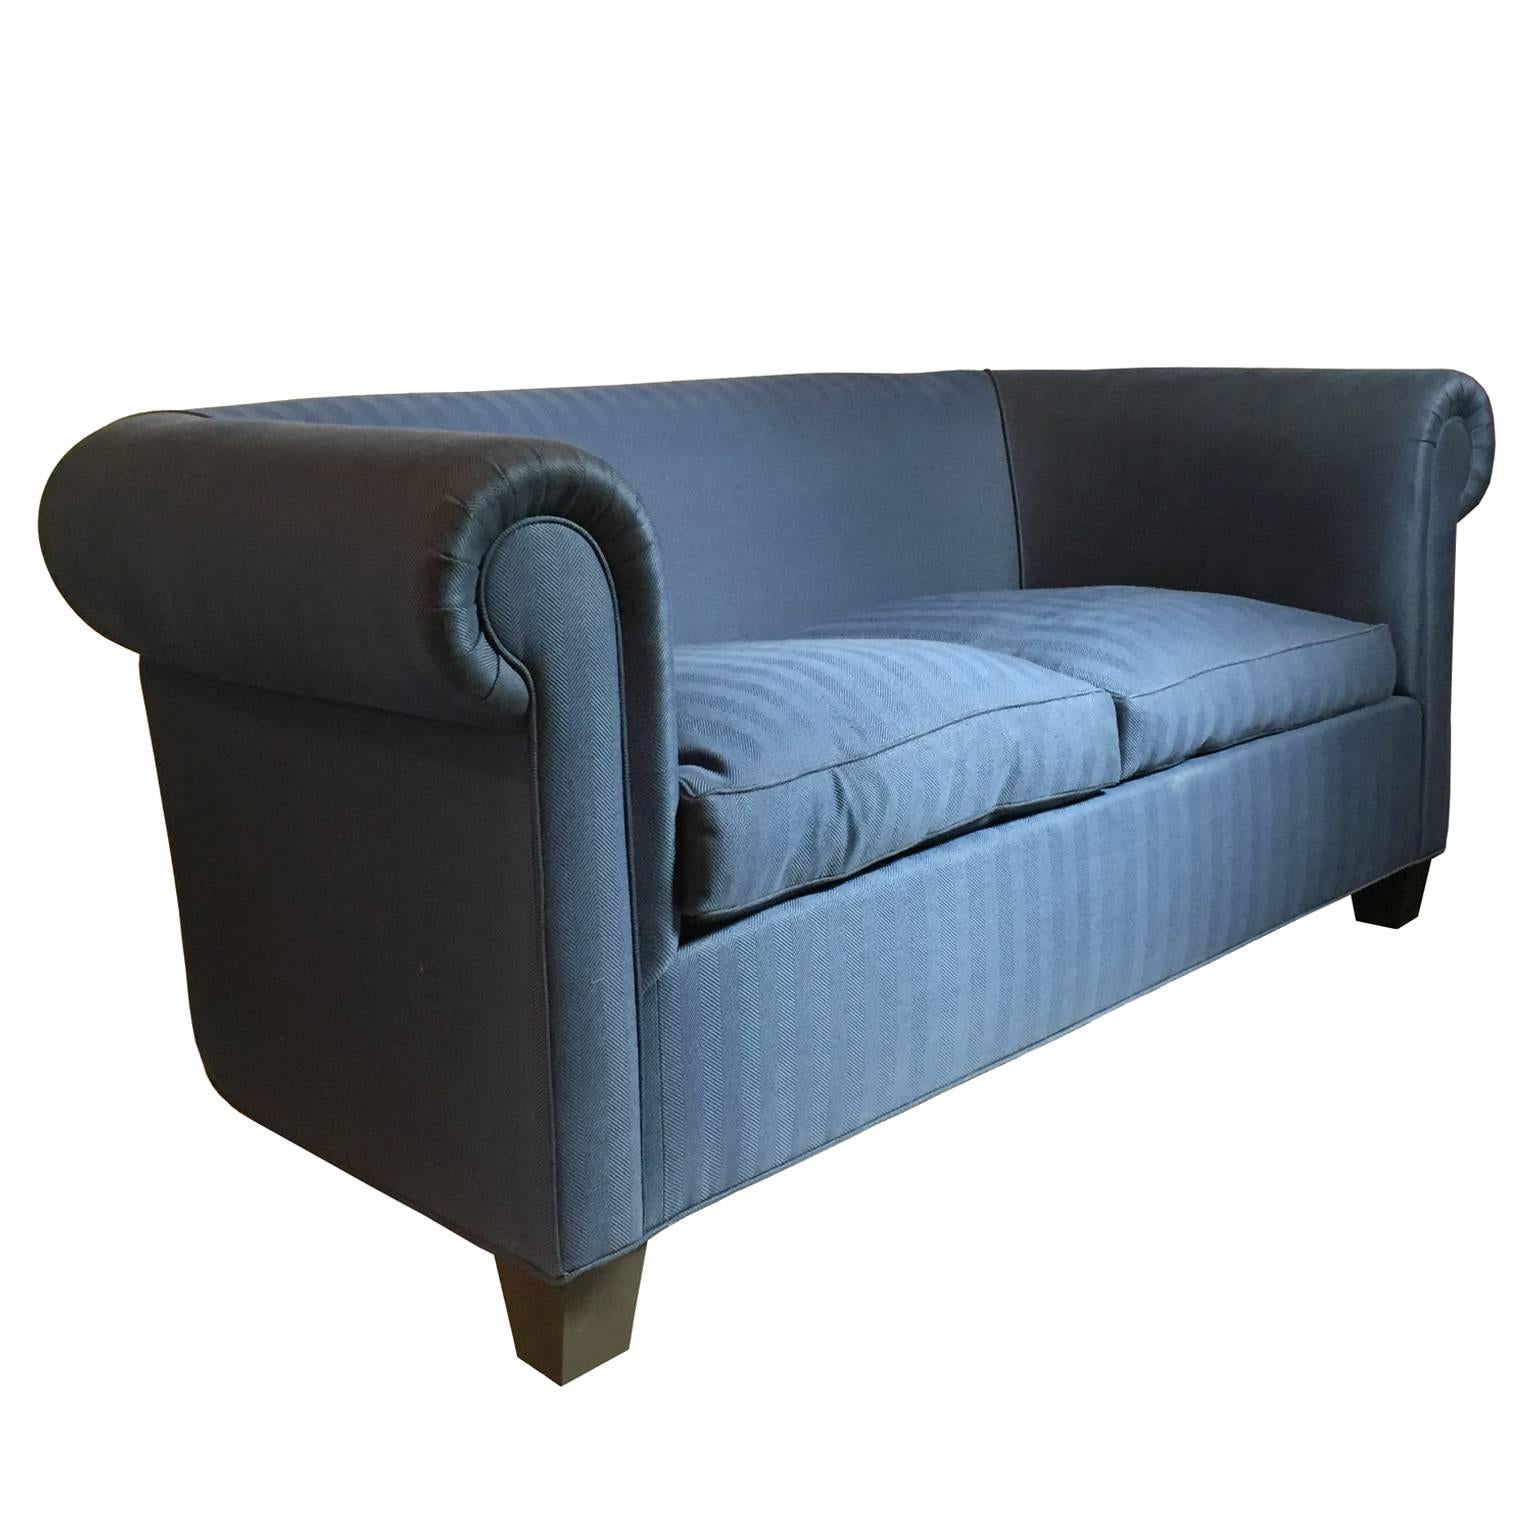 Vintage Mid-Century Italian library sofa in blue tonal herringbone upholstery.